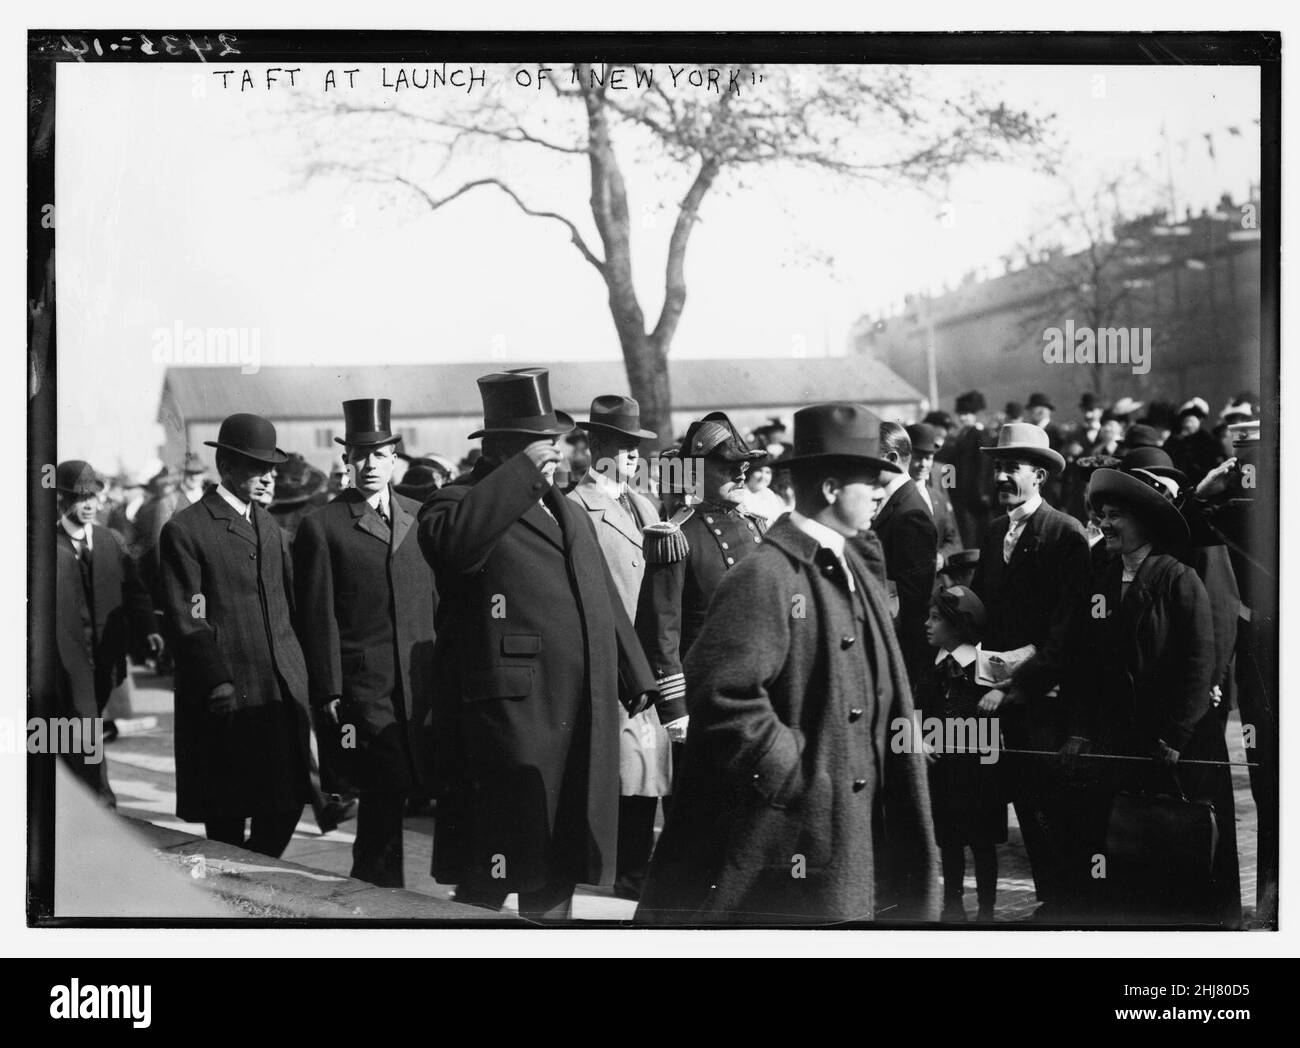 Taft at launch of NEW YORK Stock Photo